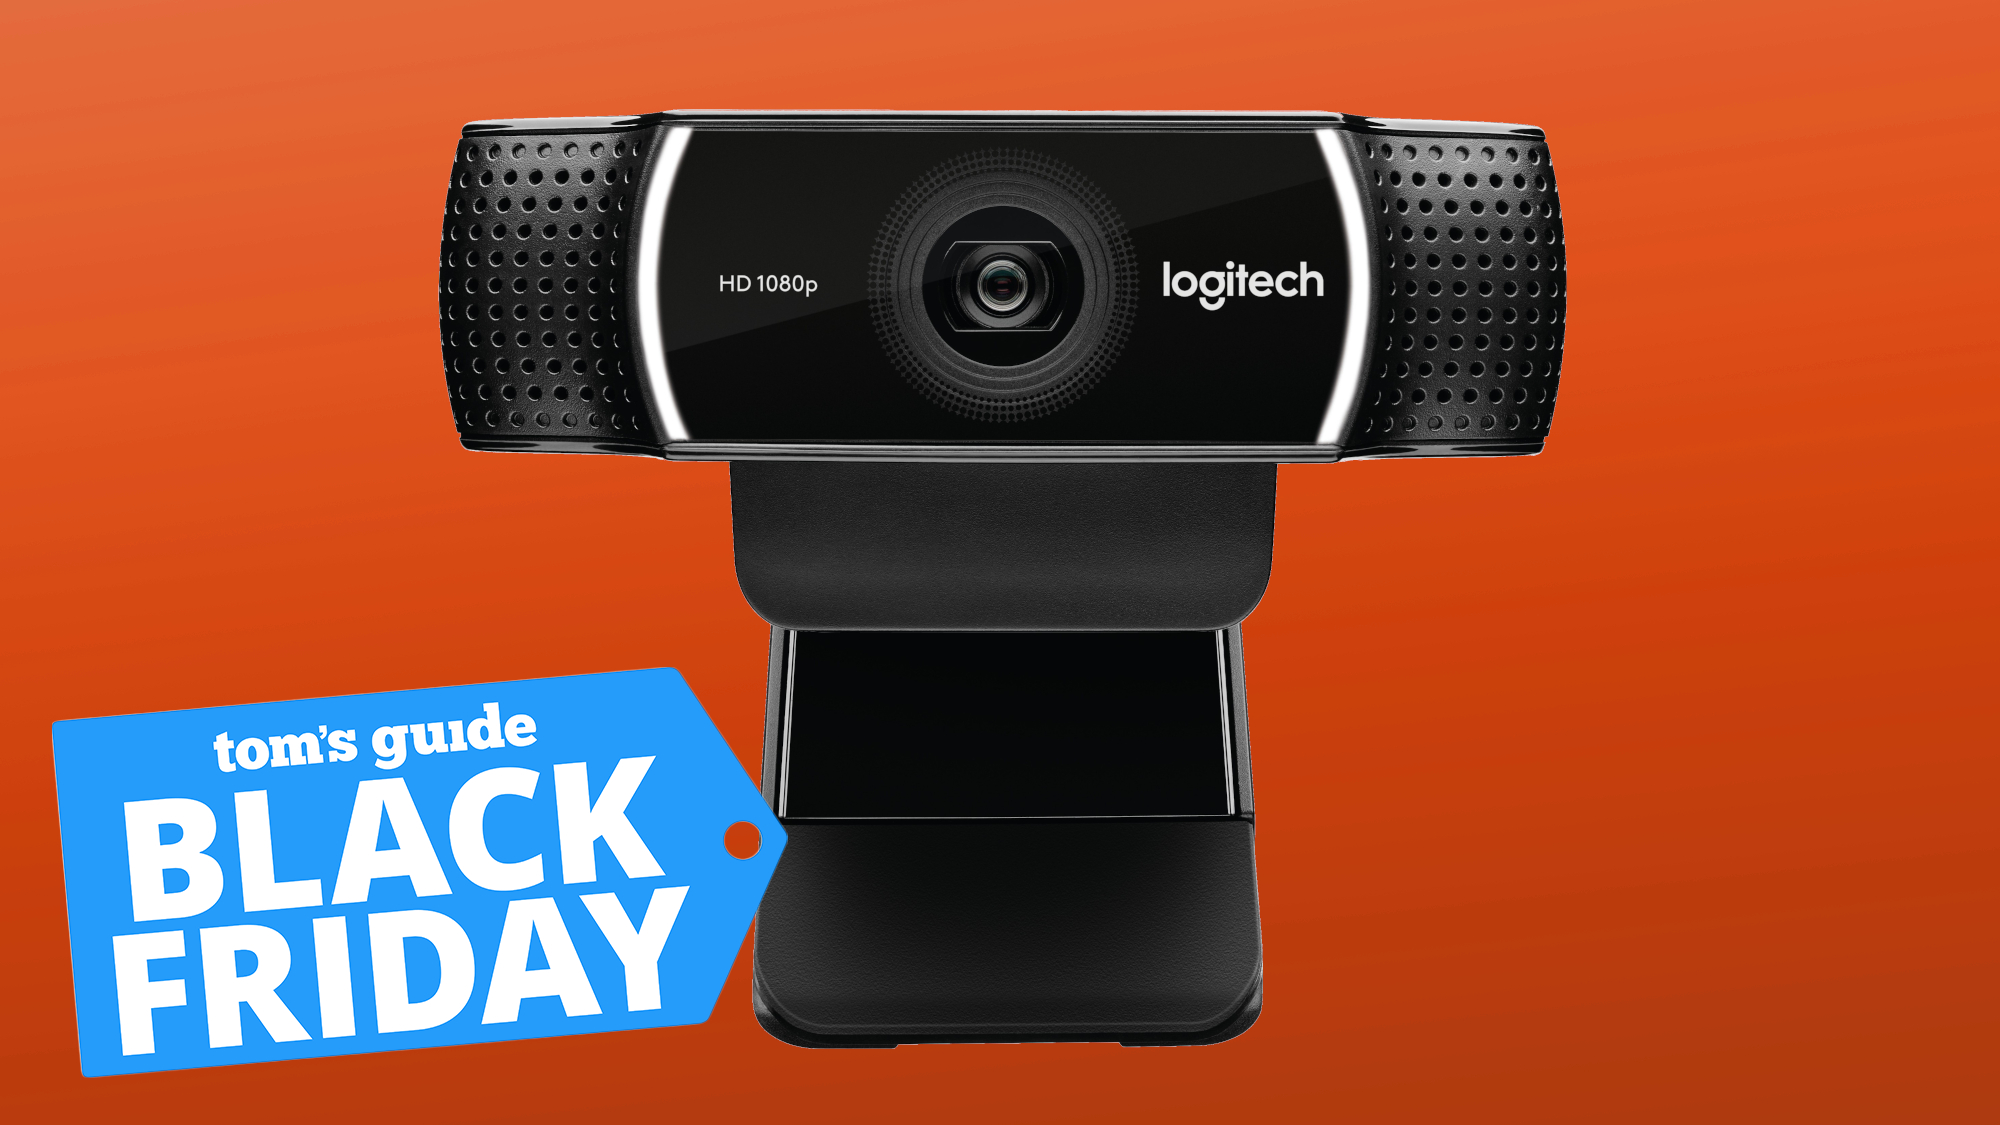 Logitech 1080p Pro Stream Webcam